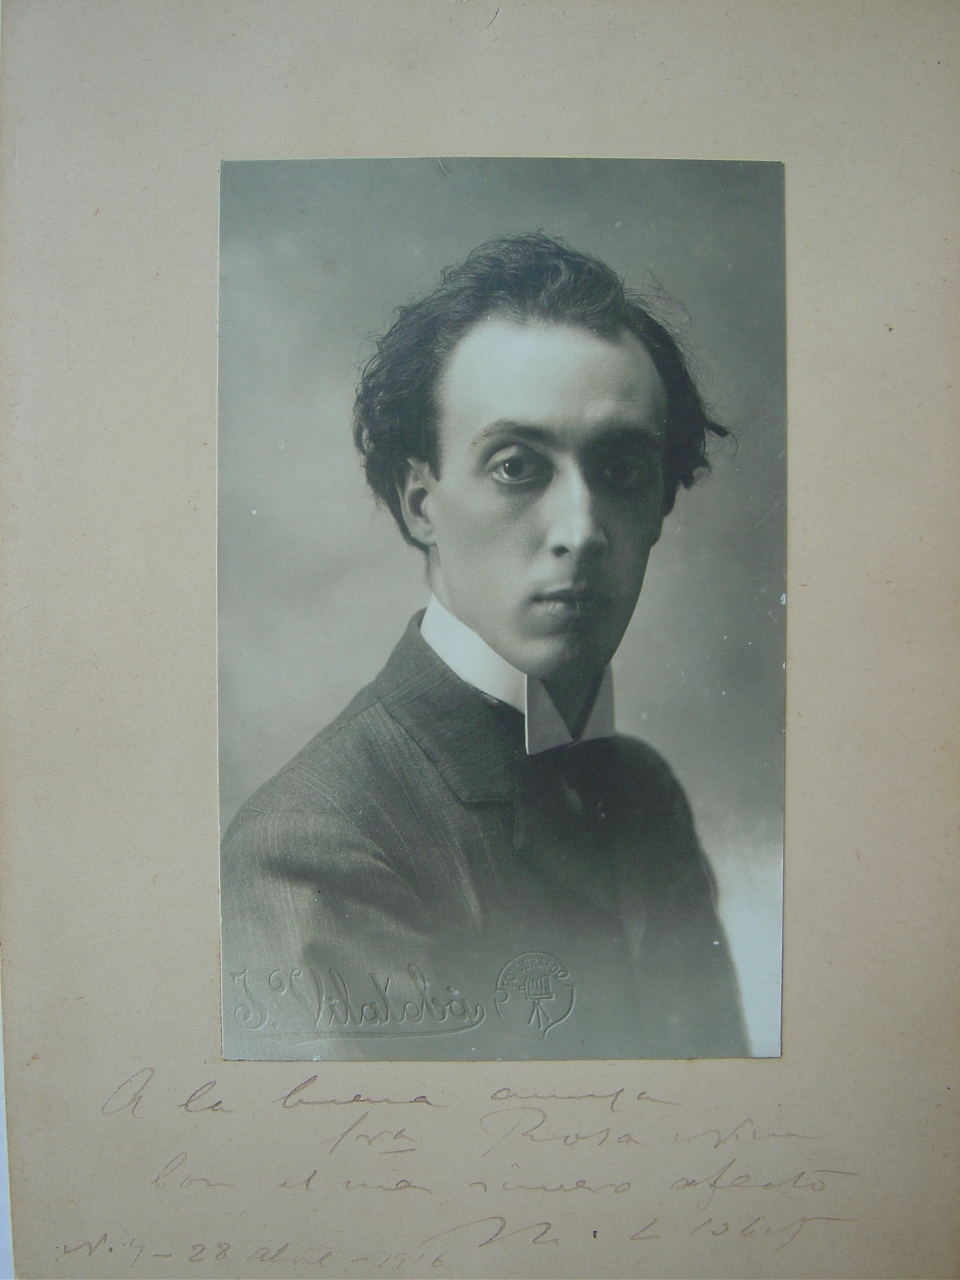 Portrait of classical guitarist/composer Miguel Llobet dated 1916